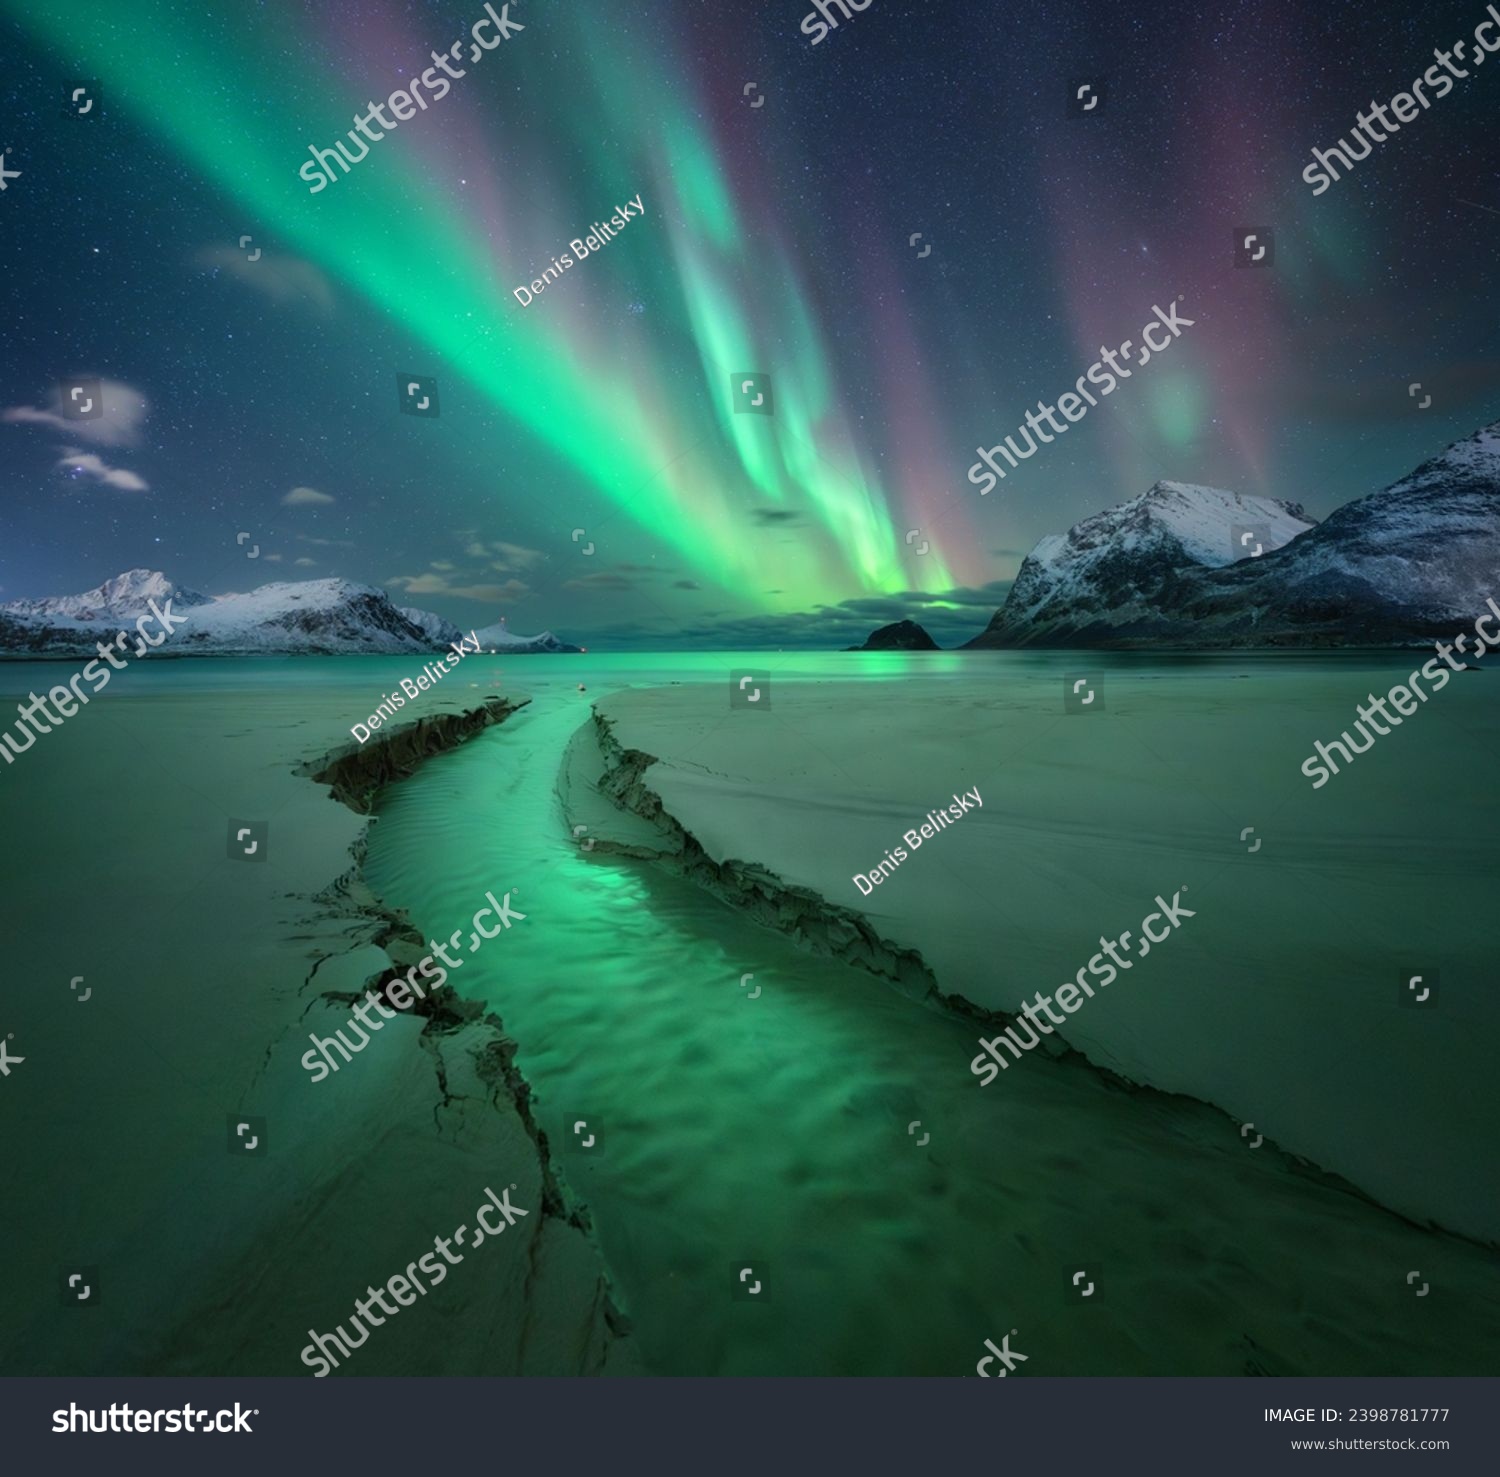 Northern Lights, snowy mountains, sandy beach, creek at starry winter night. Lofoten islands, Norway. Amazing Aurora borealis. Sky with polar lights. Landscape with aurora, sea, stream, rocks in snow #2398781777